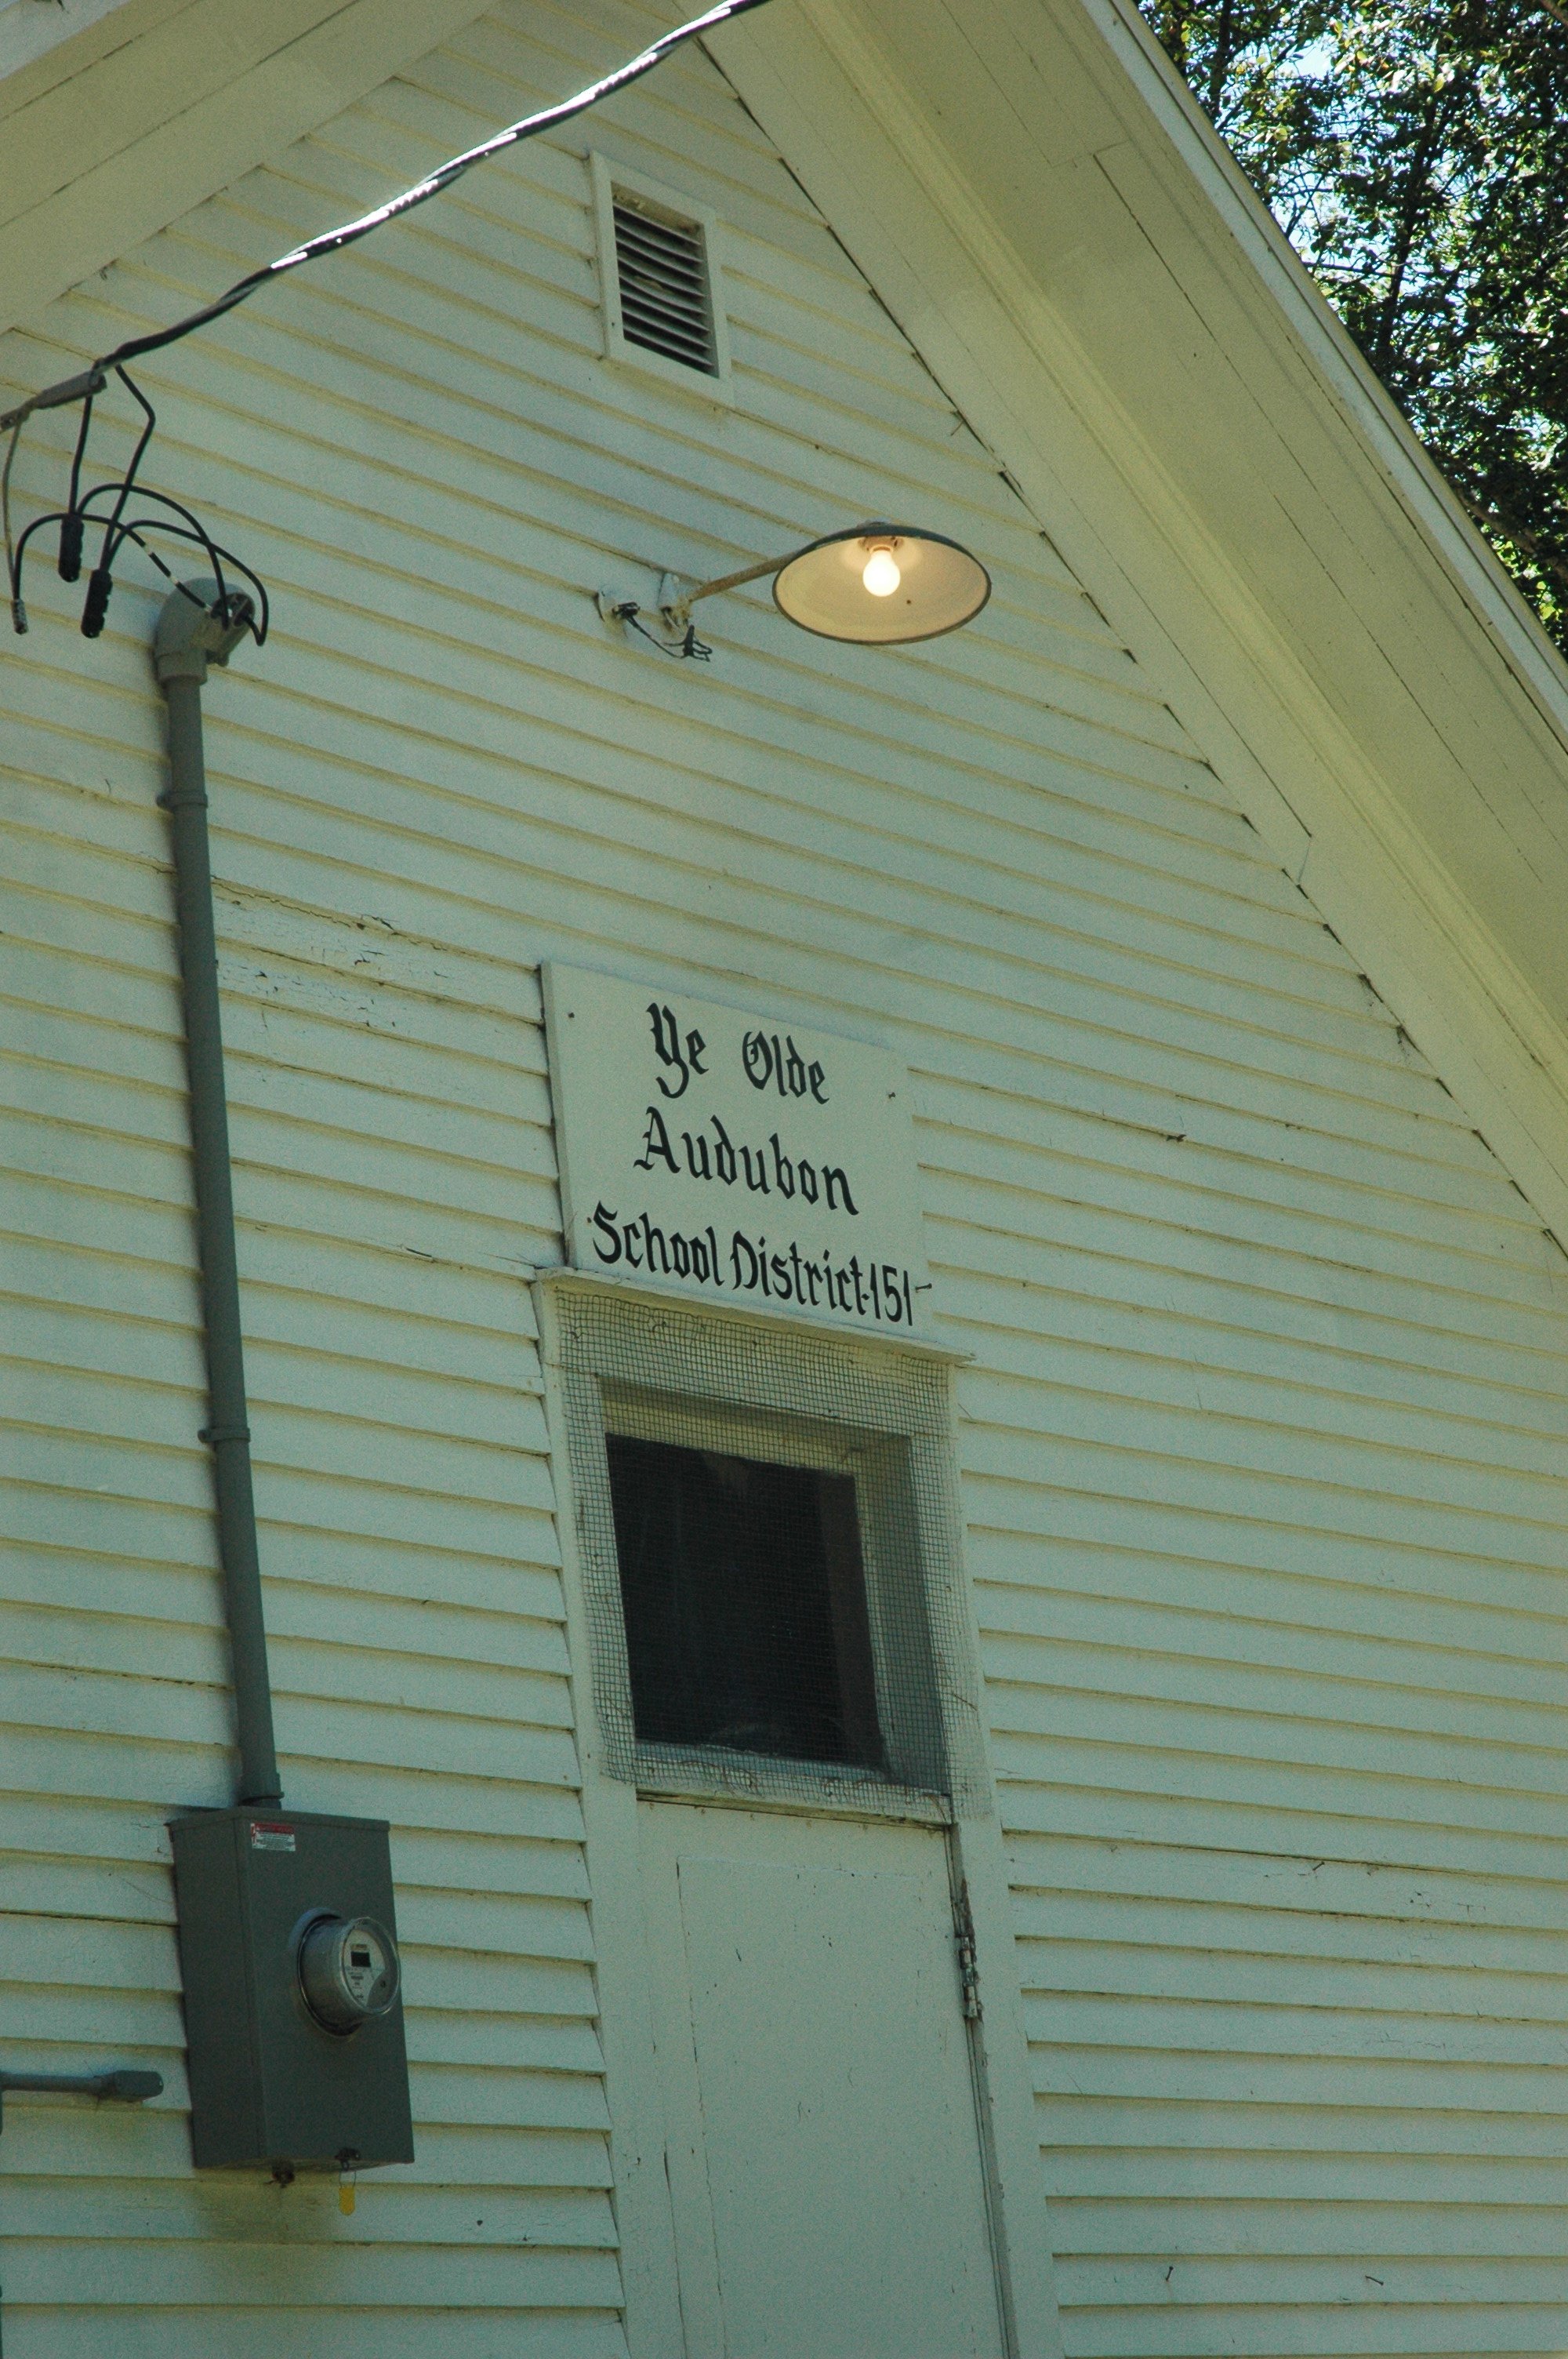 Ye Olde Audubon School District – 151, August 2013